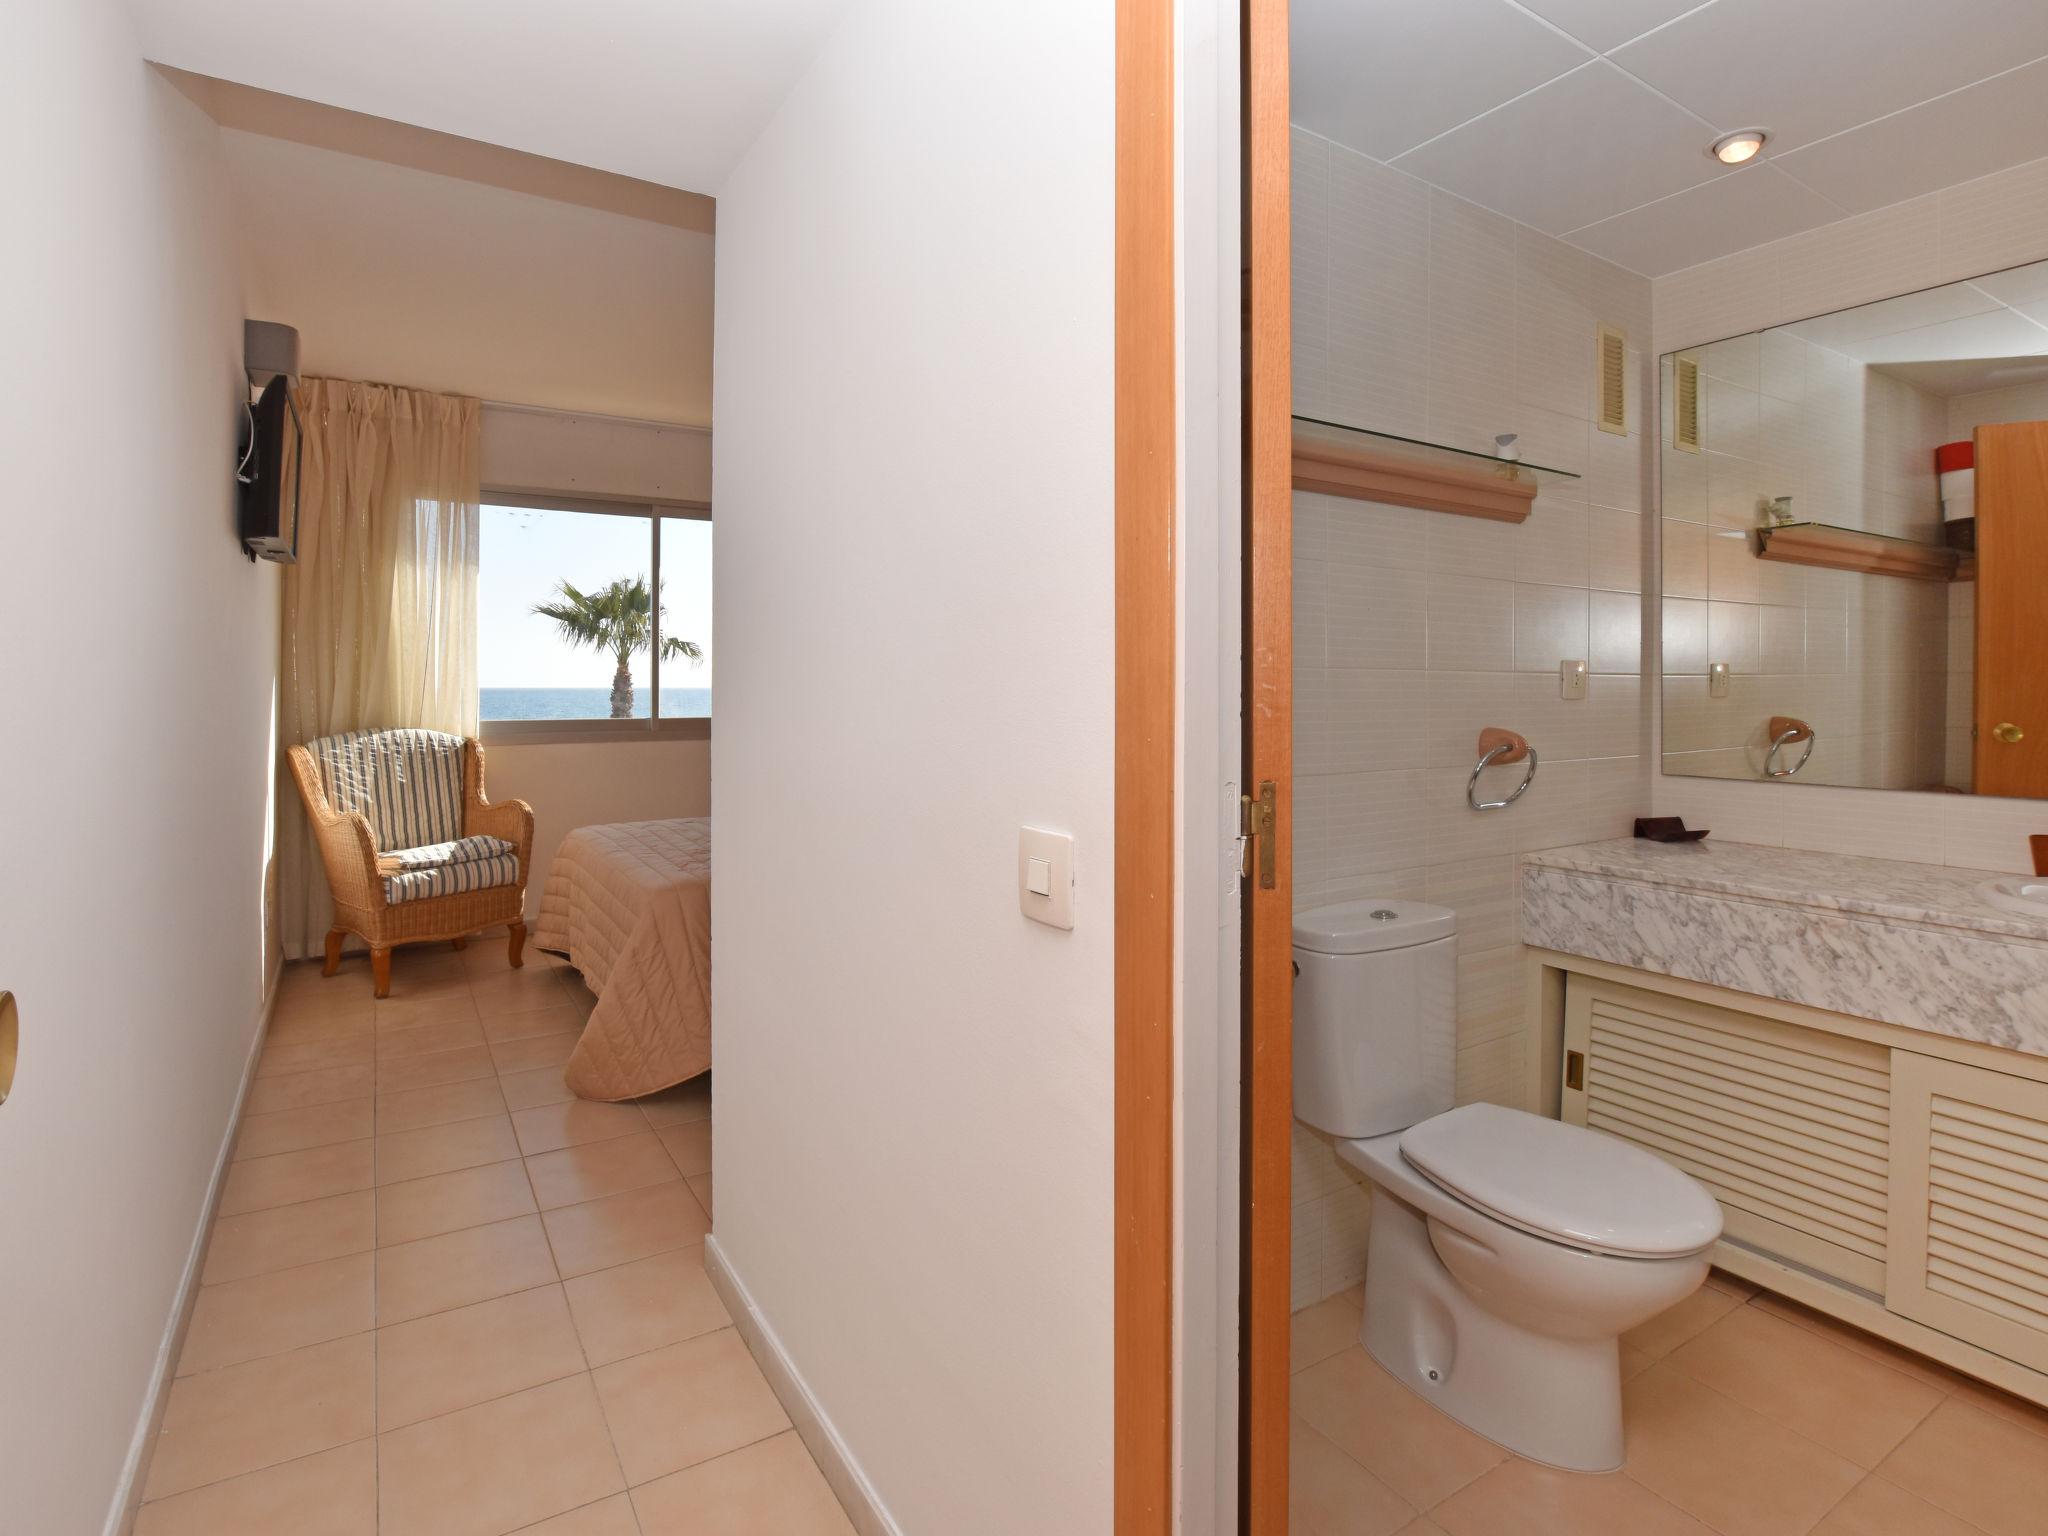 Photo 16 - Appartement de 4 chambres à Torredembarra avec piscine et vues à la mer